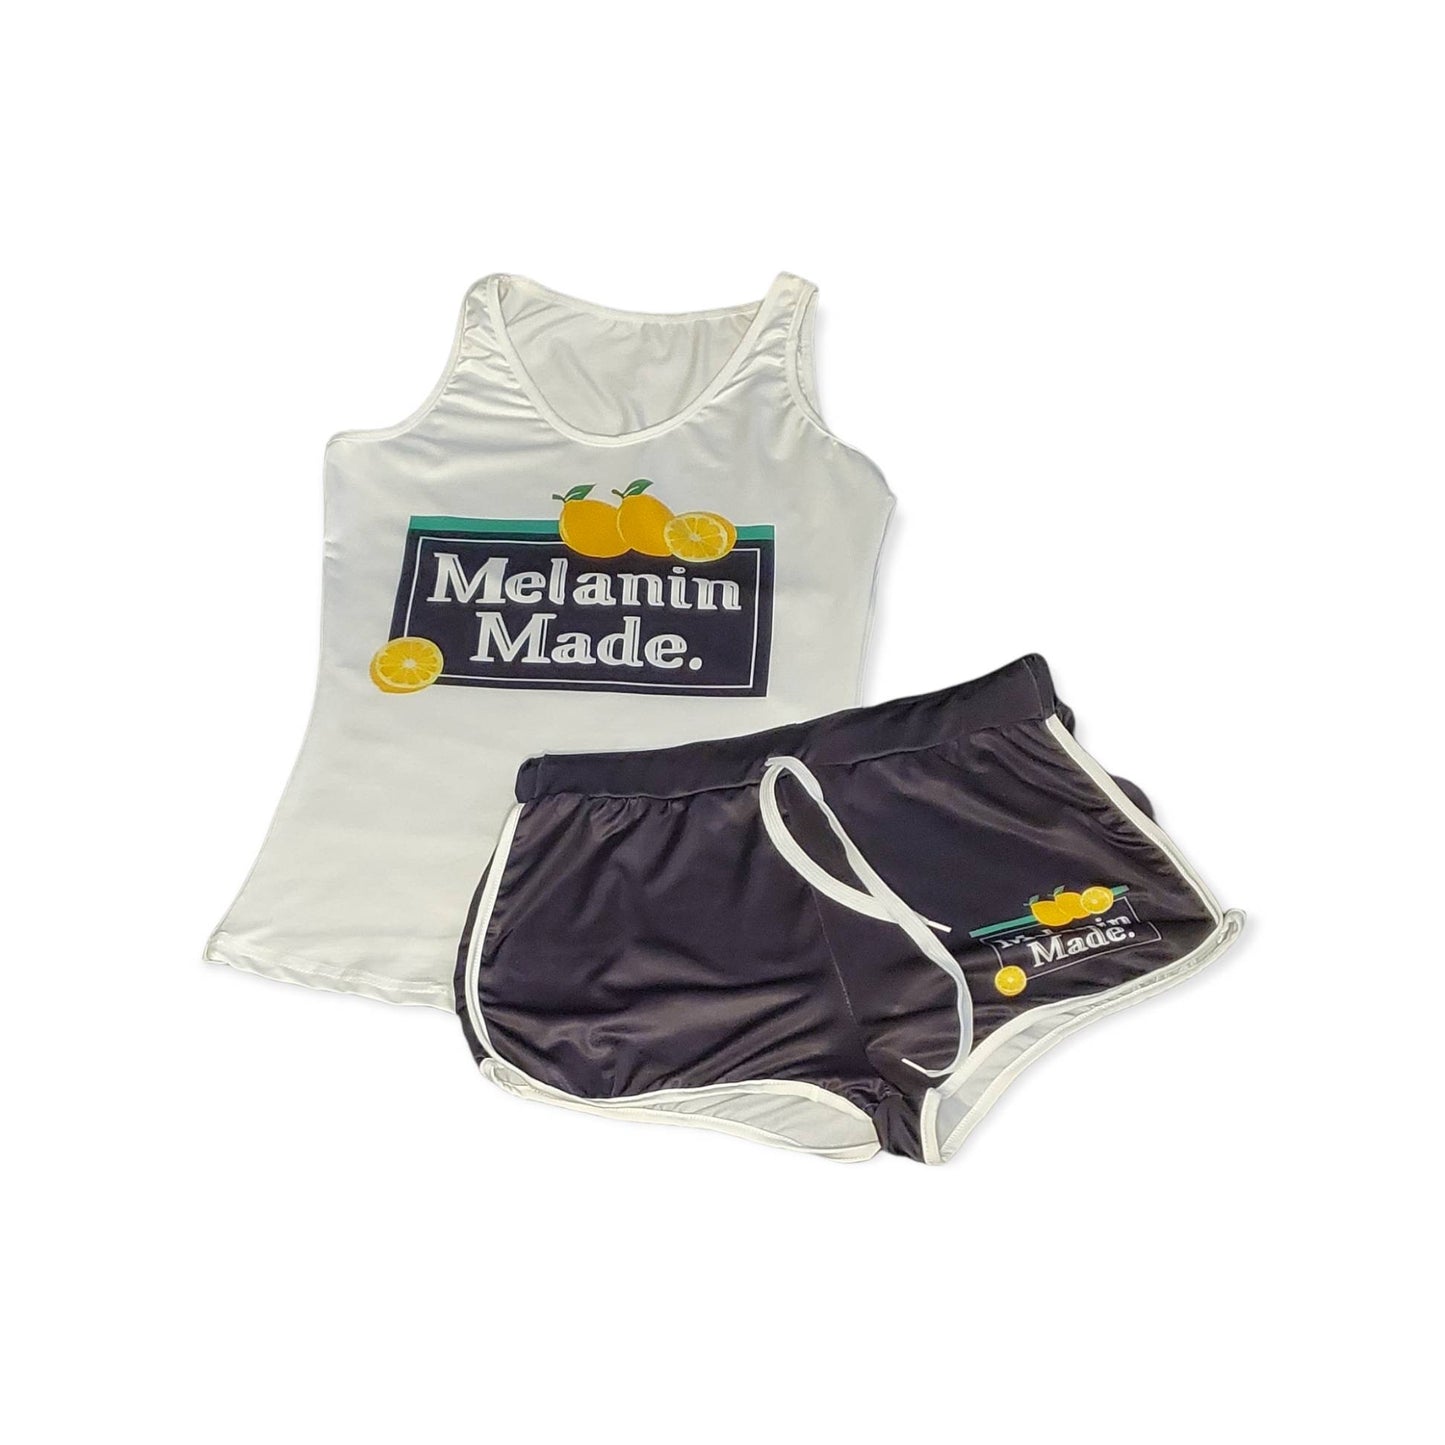 Melanin Maid Short Set